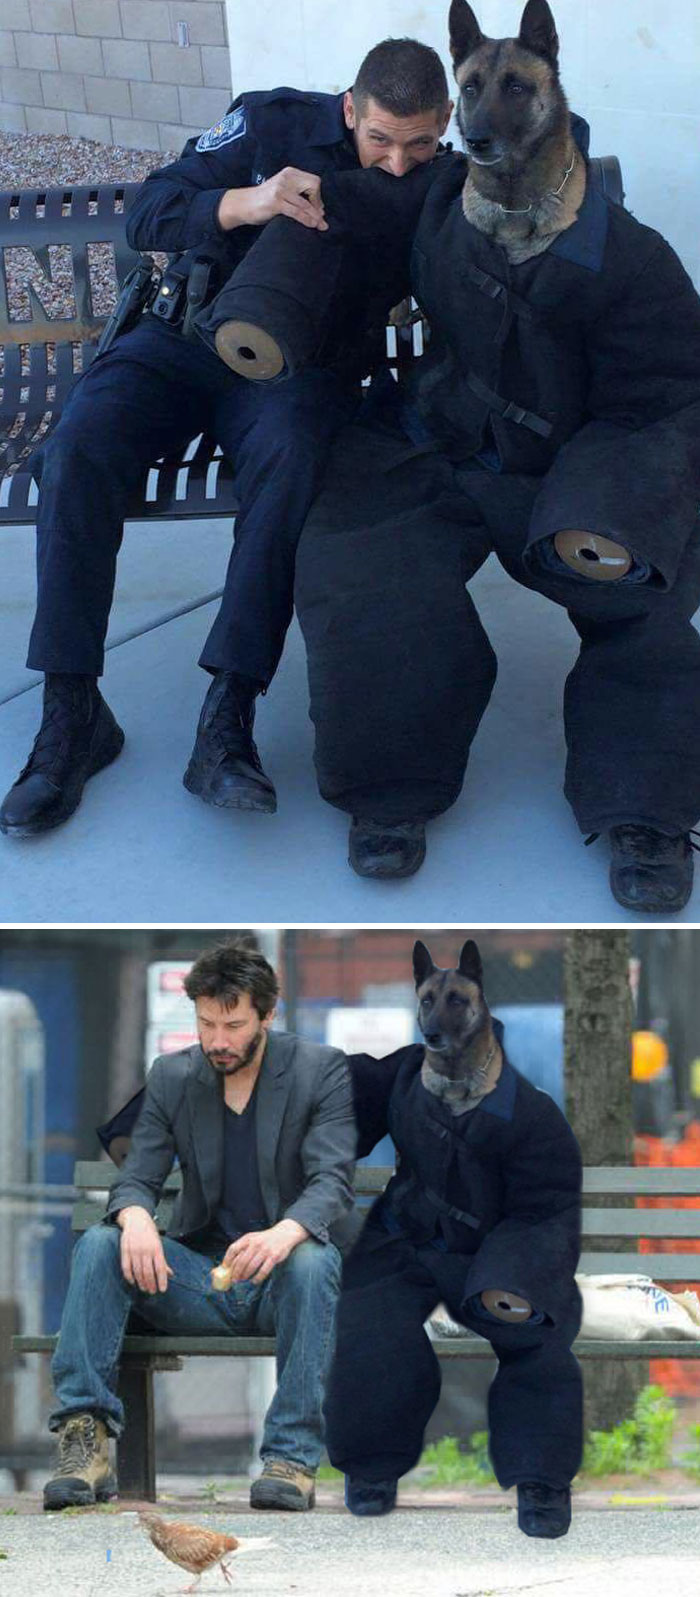 Policeman Bites Dog